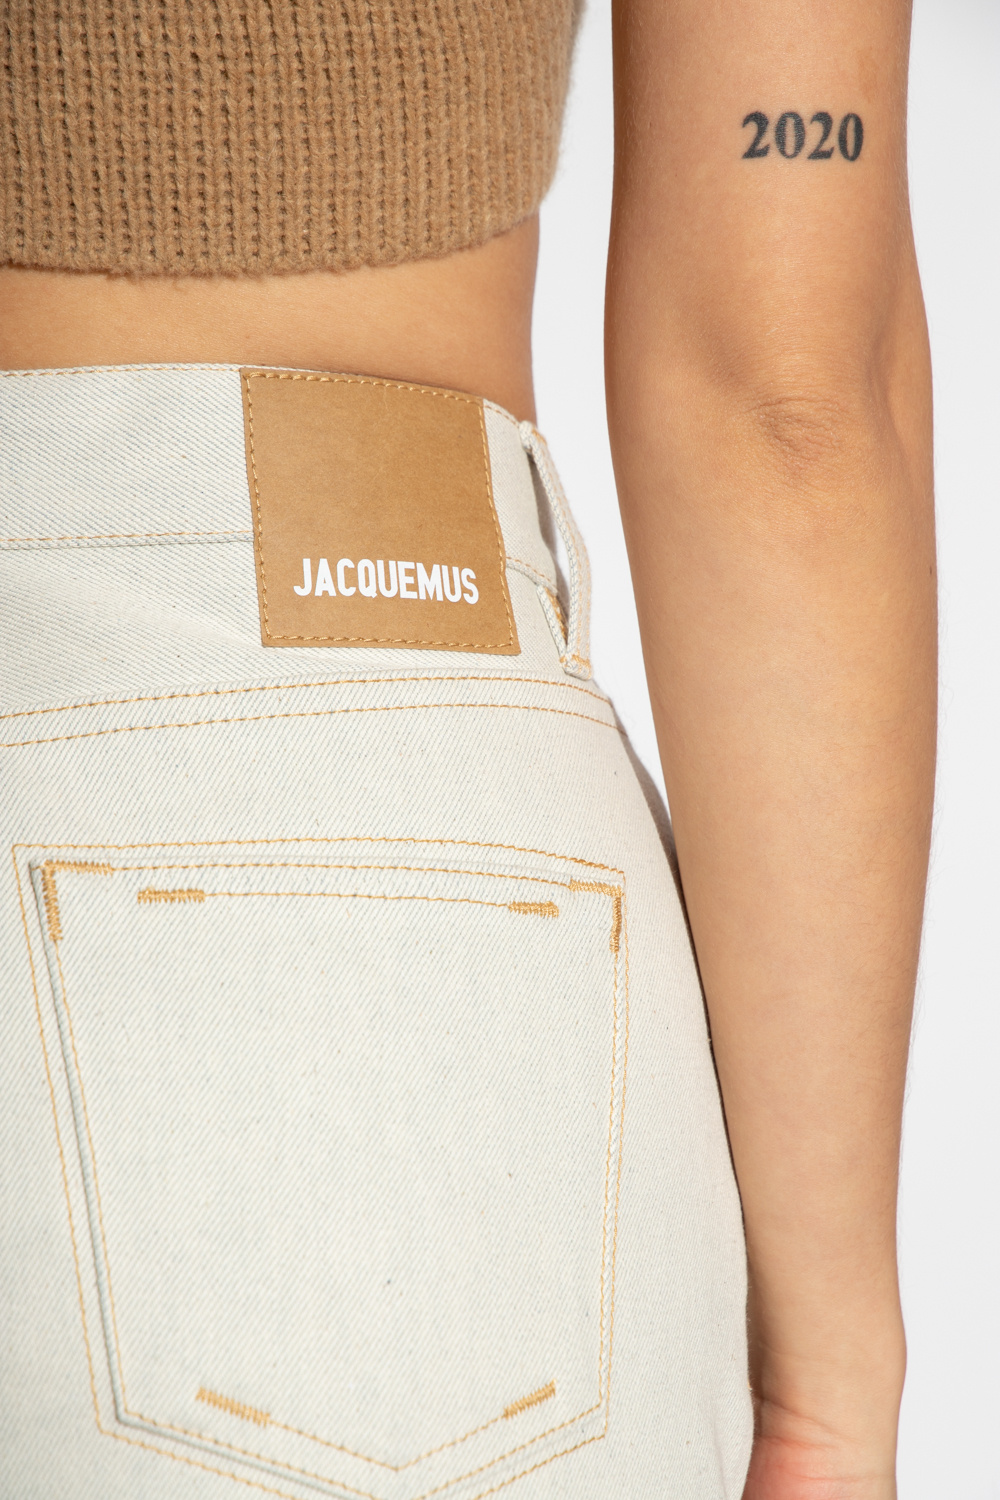 Jacquemus ‘Yelo’ jeans